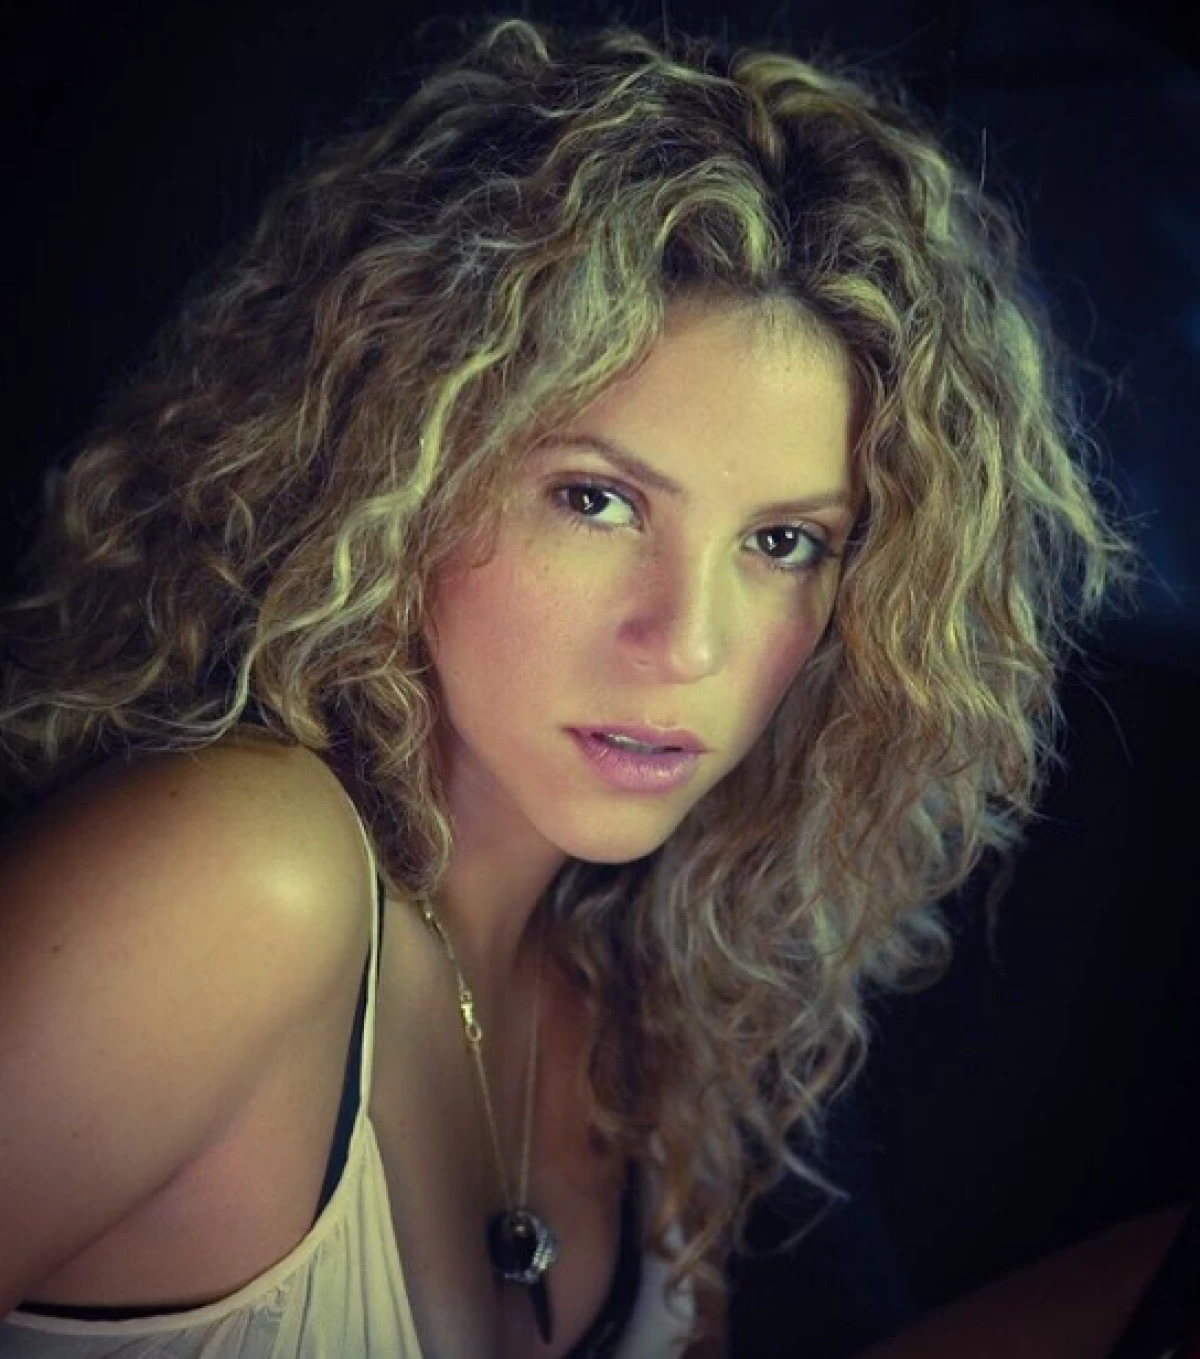 Фото: Инстаграм.com/Shakira/